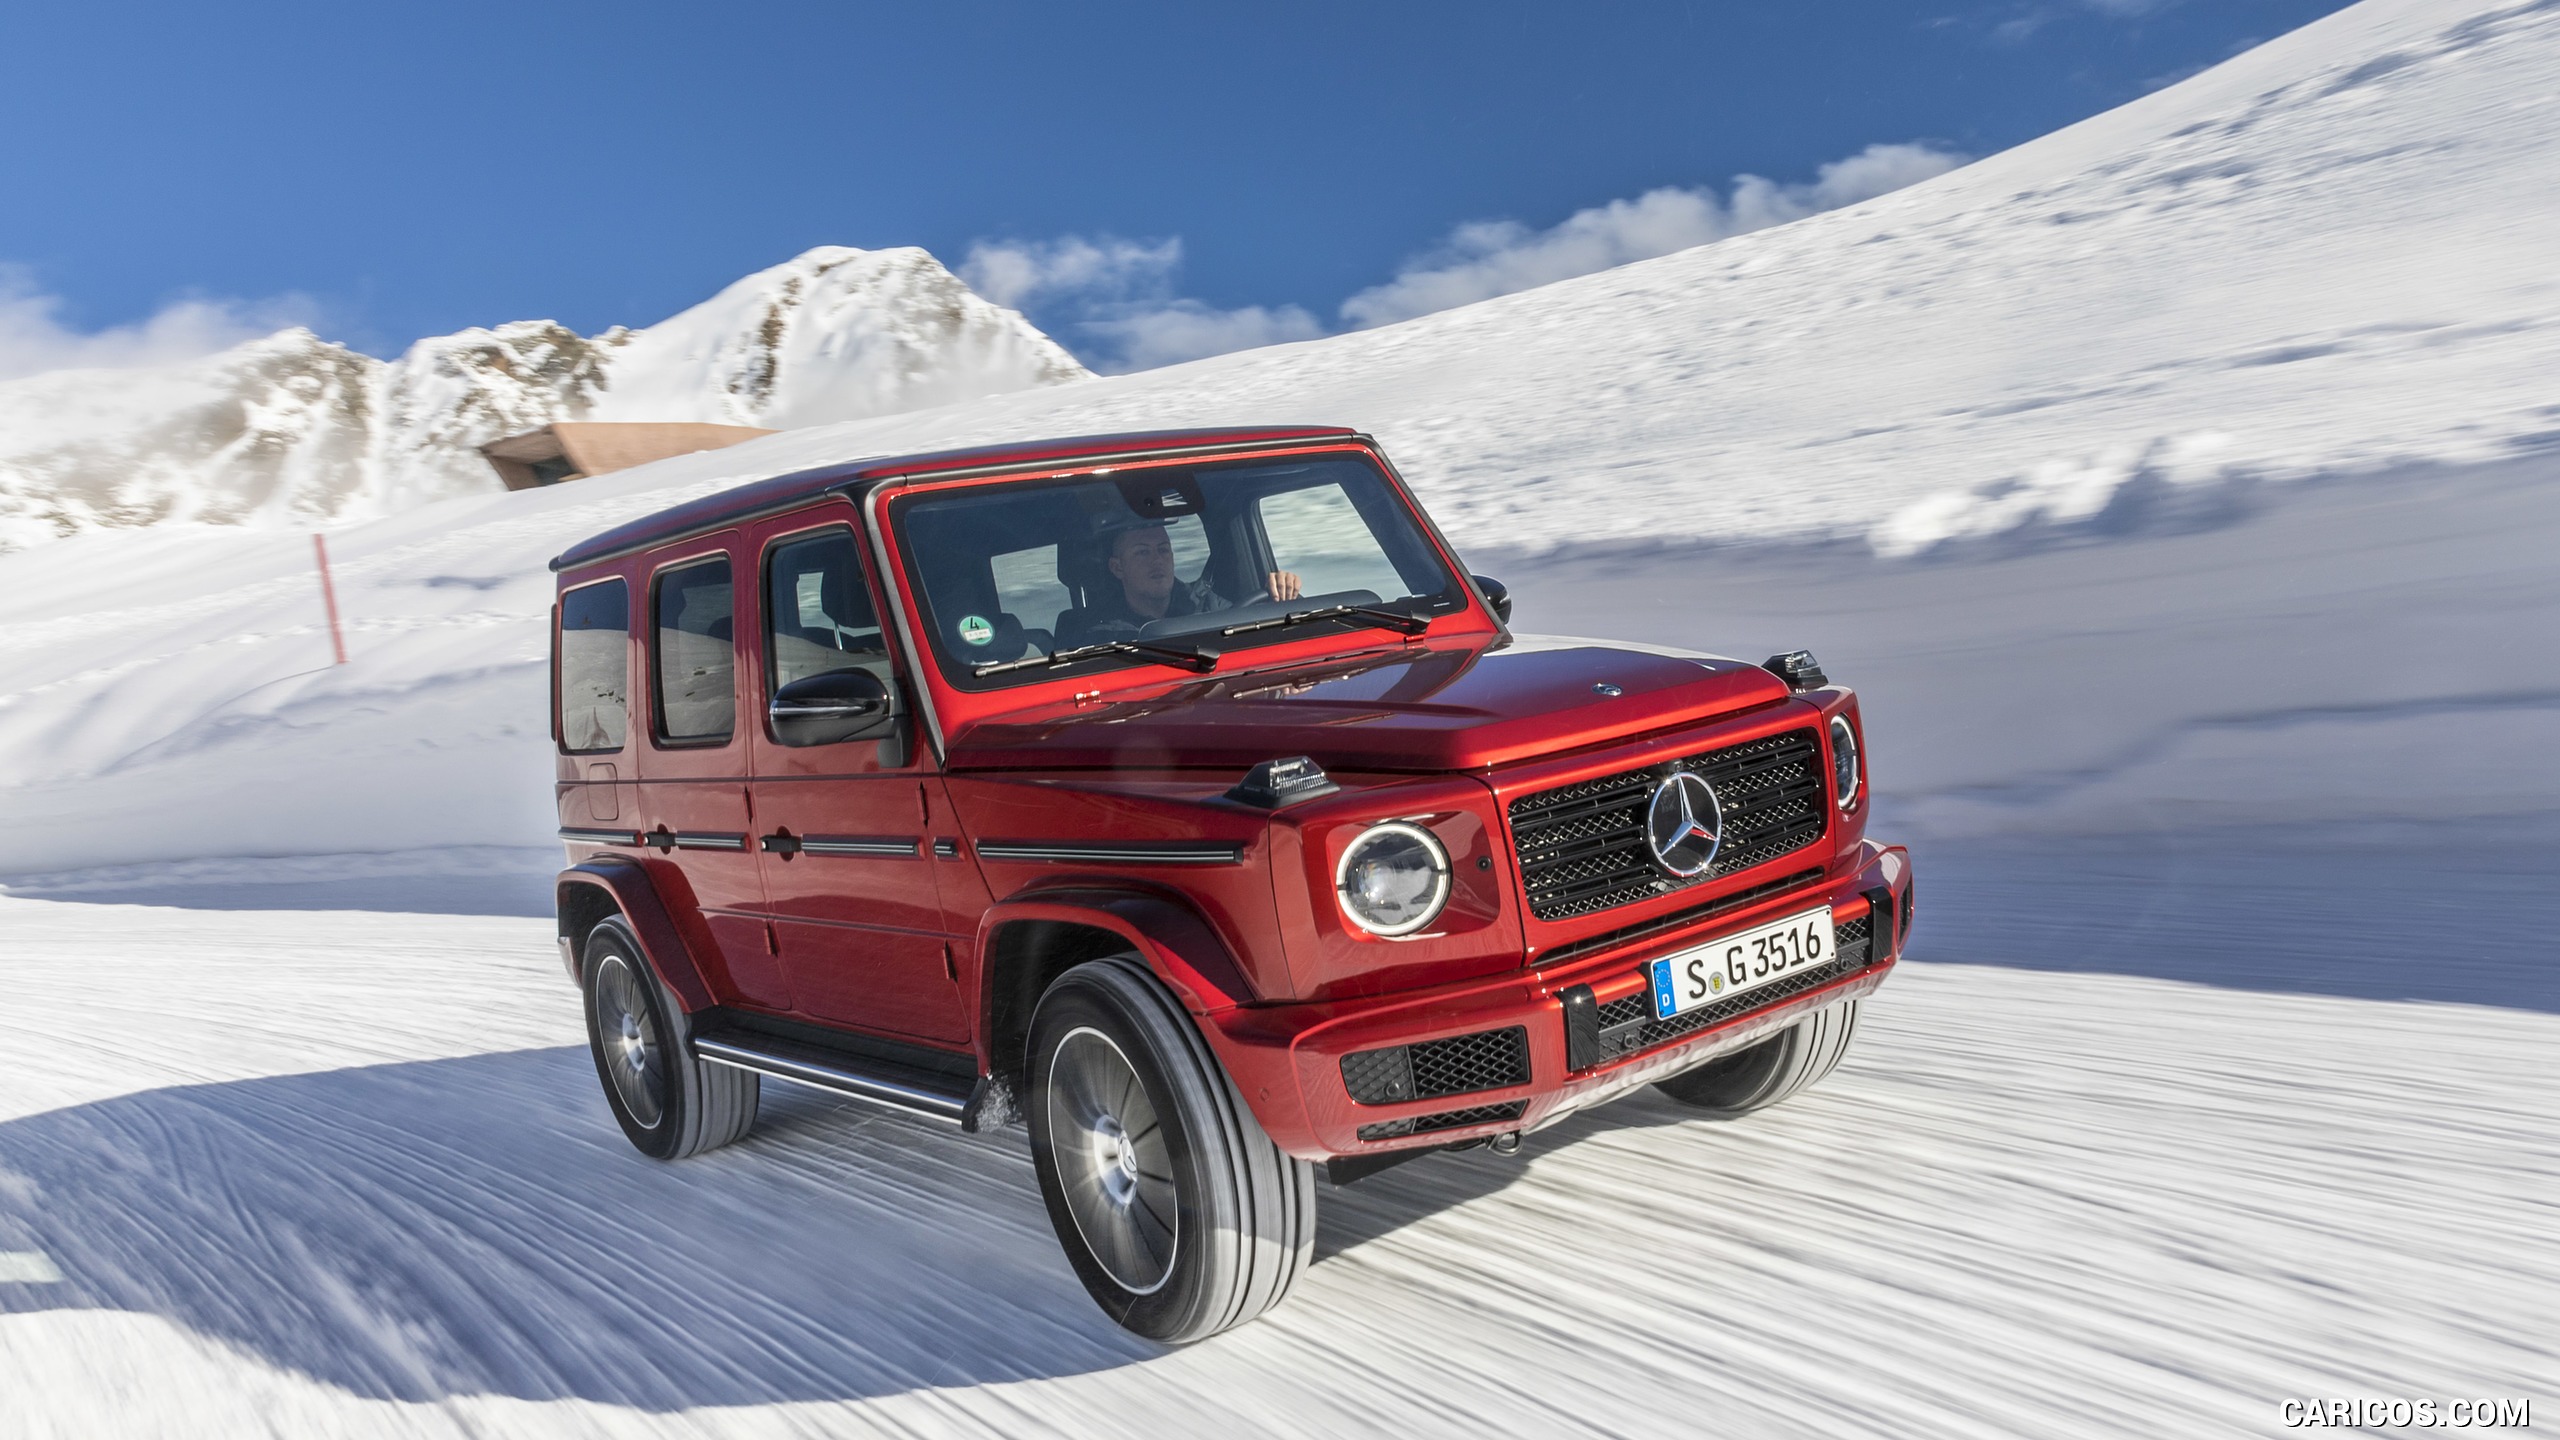 2019 Mercedes-Benz G 350 d (Designo Hyazinth Red Metallic) - In Snow - Front Three-Quarter, #3 of 51